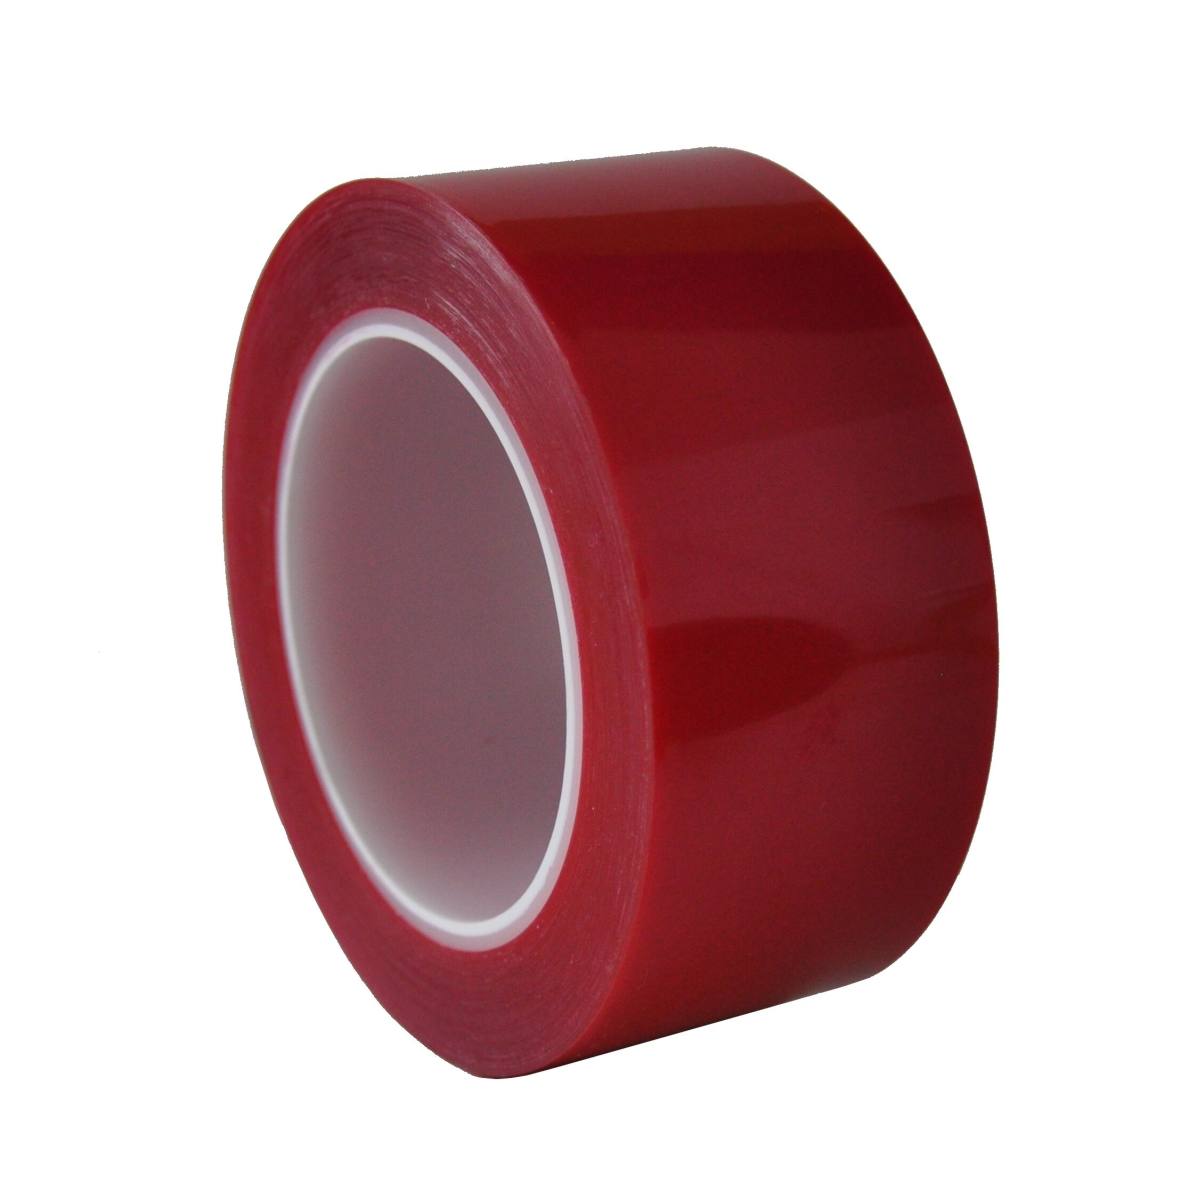 S-K-S 208R ruban adhésif en polyester, 200mmx66m, rouge